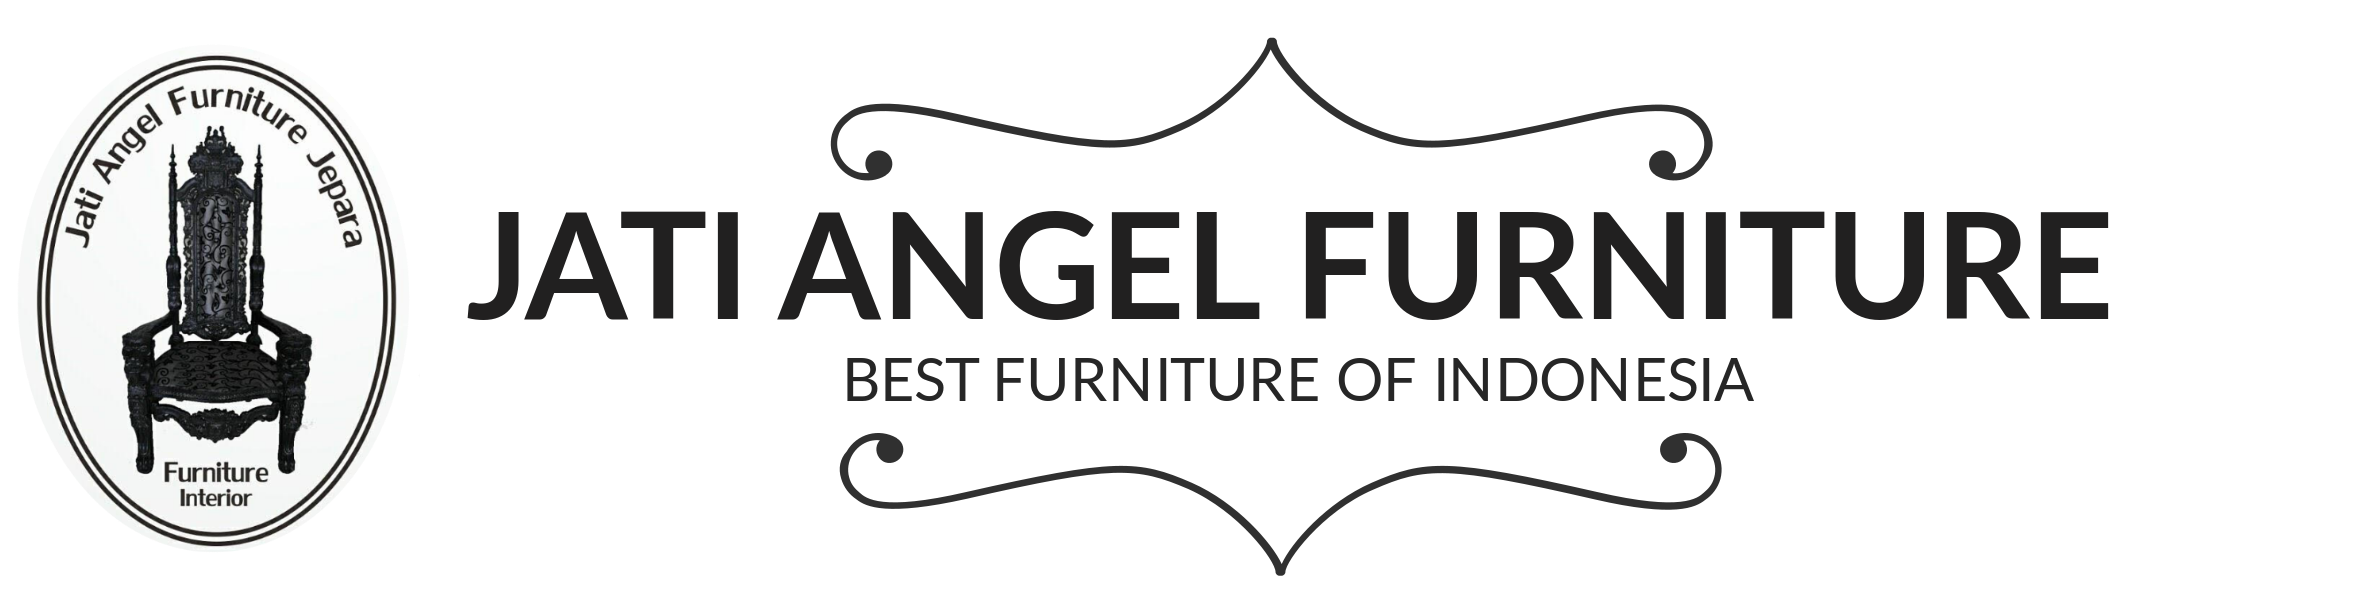 Jati Angel Furniture